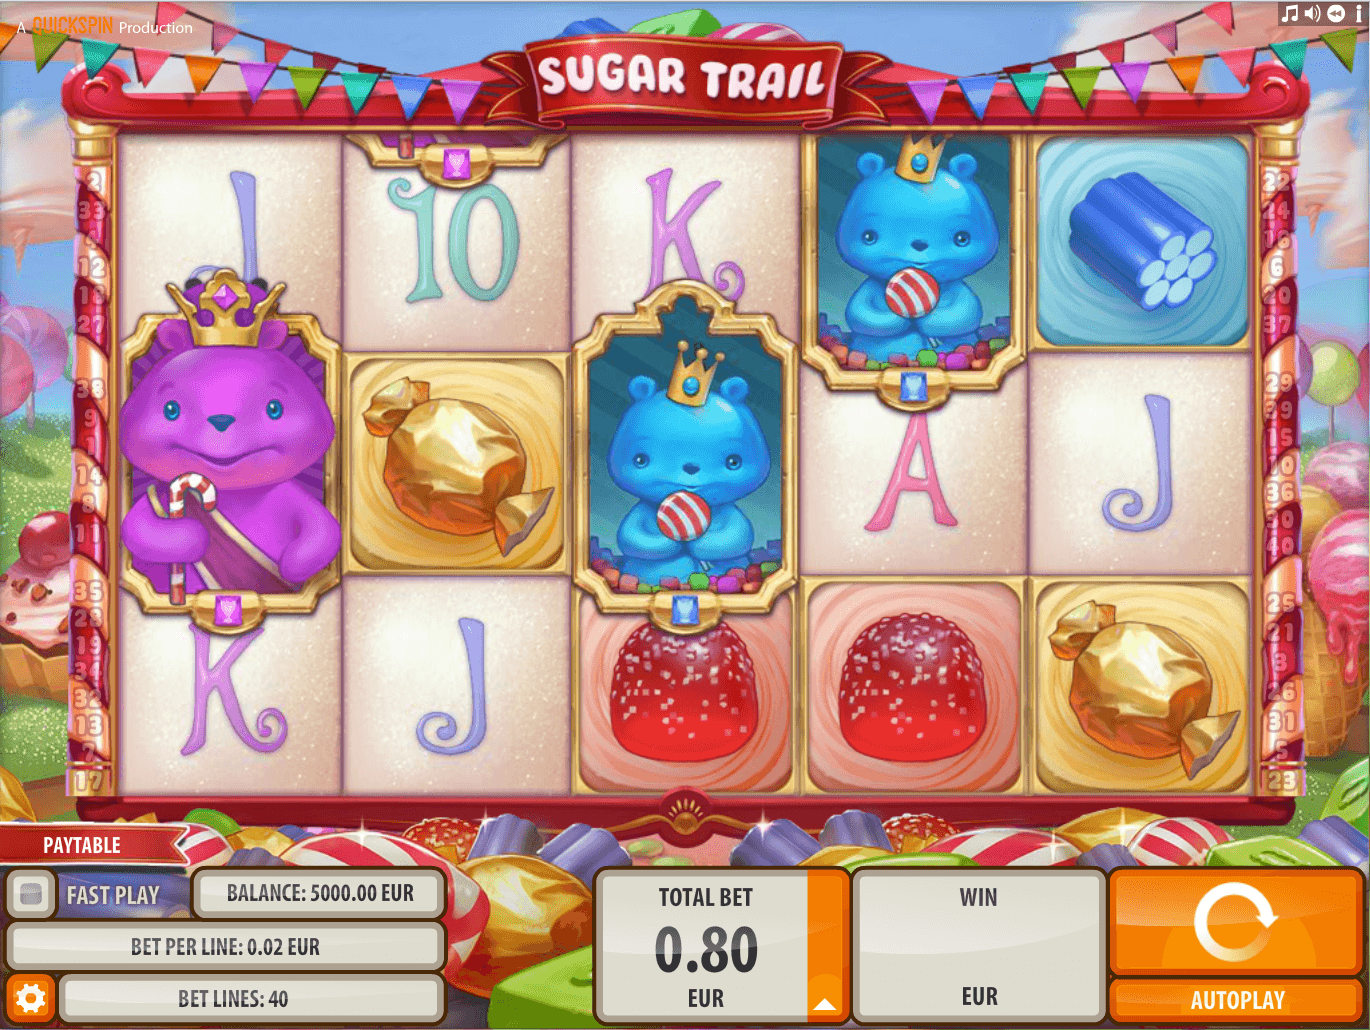 Rainbow riches free spins casino